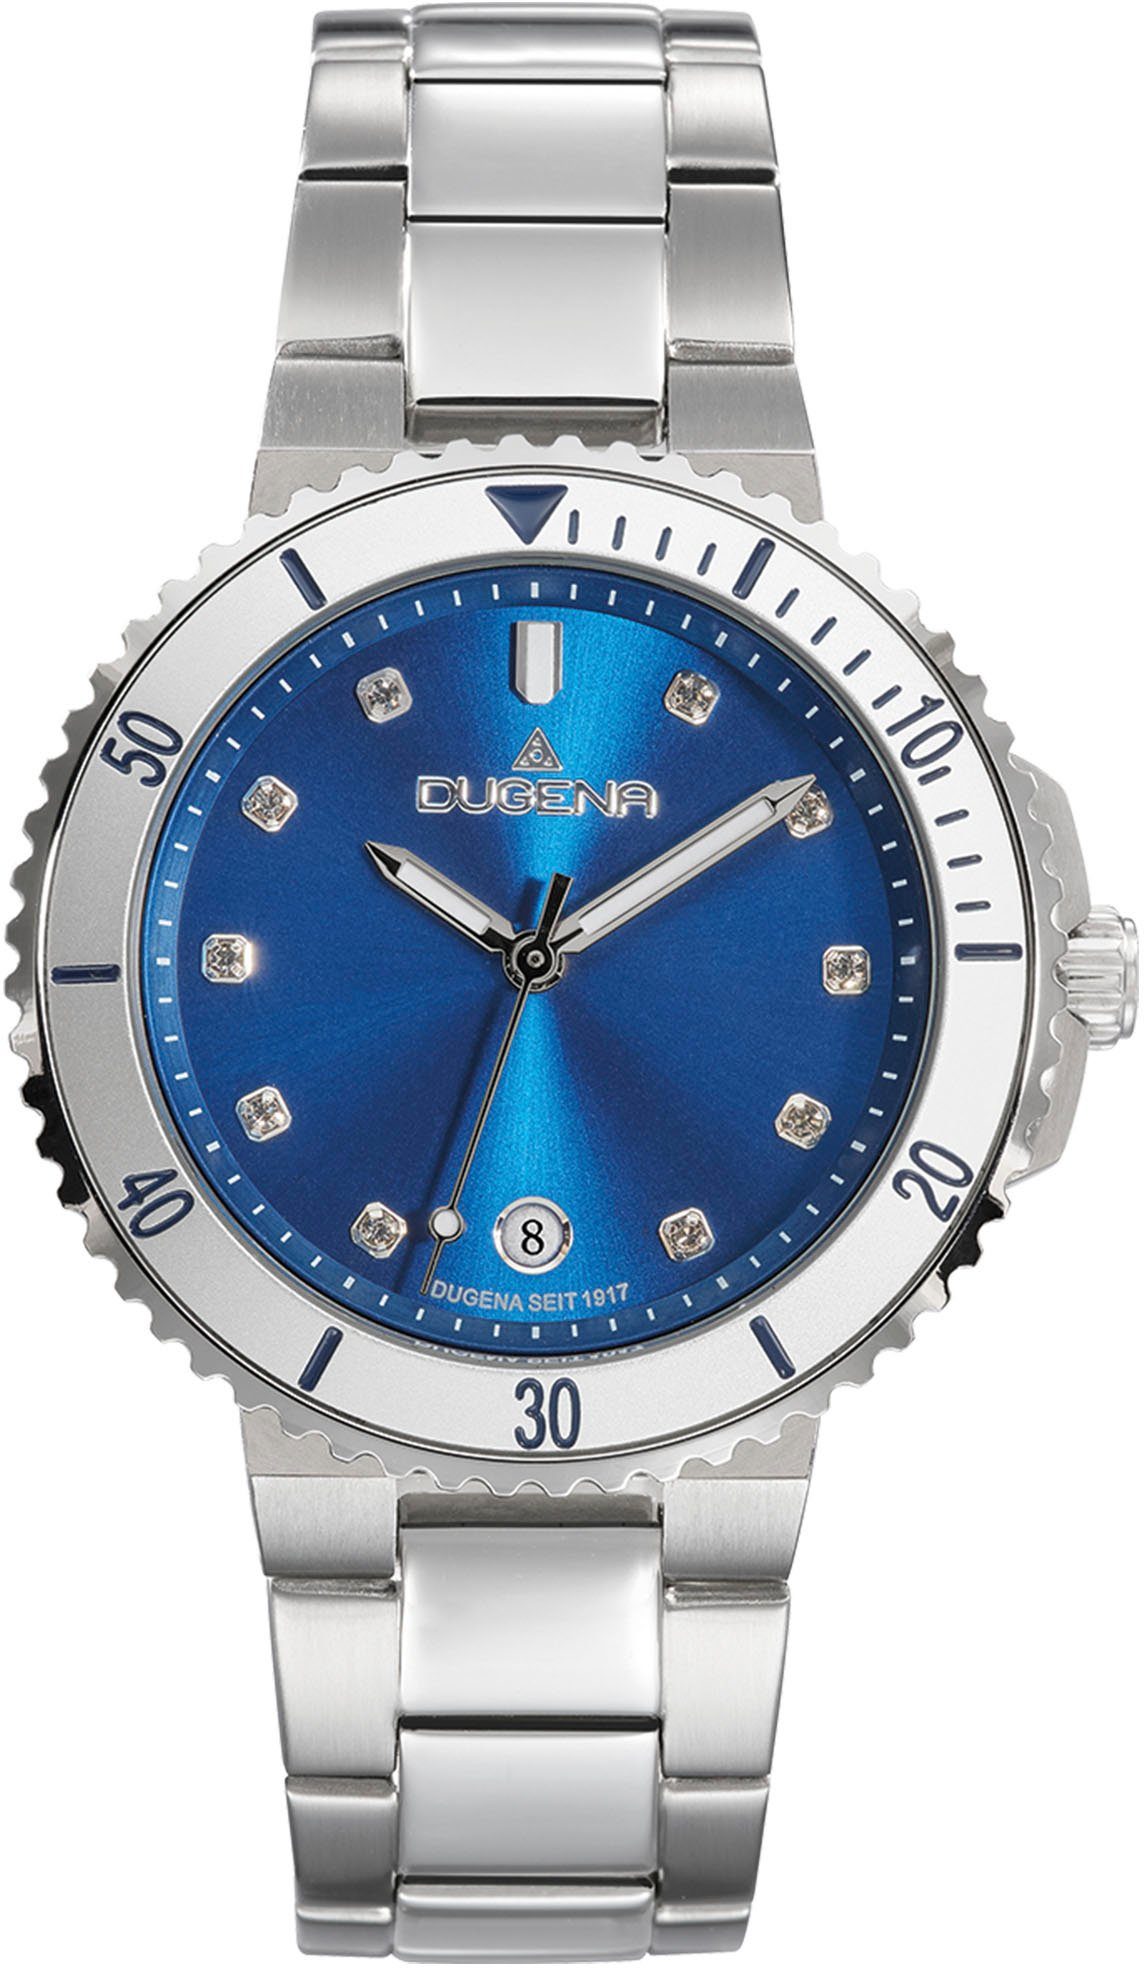 Dugena Quarzuhr Quarz, Diver, 4461101, Edelstahl, Mineralglas 4461101 Lady blaues Zifferblatt, Diver, Damenuhr Lady